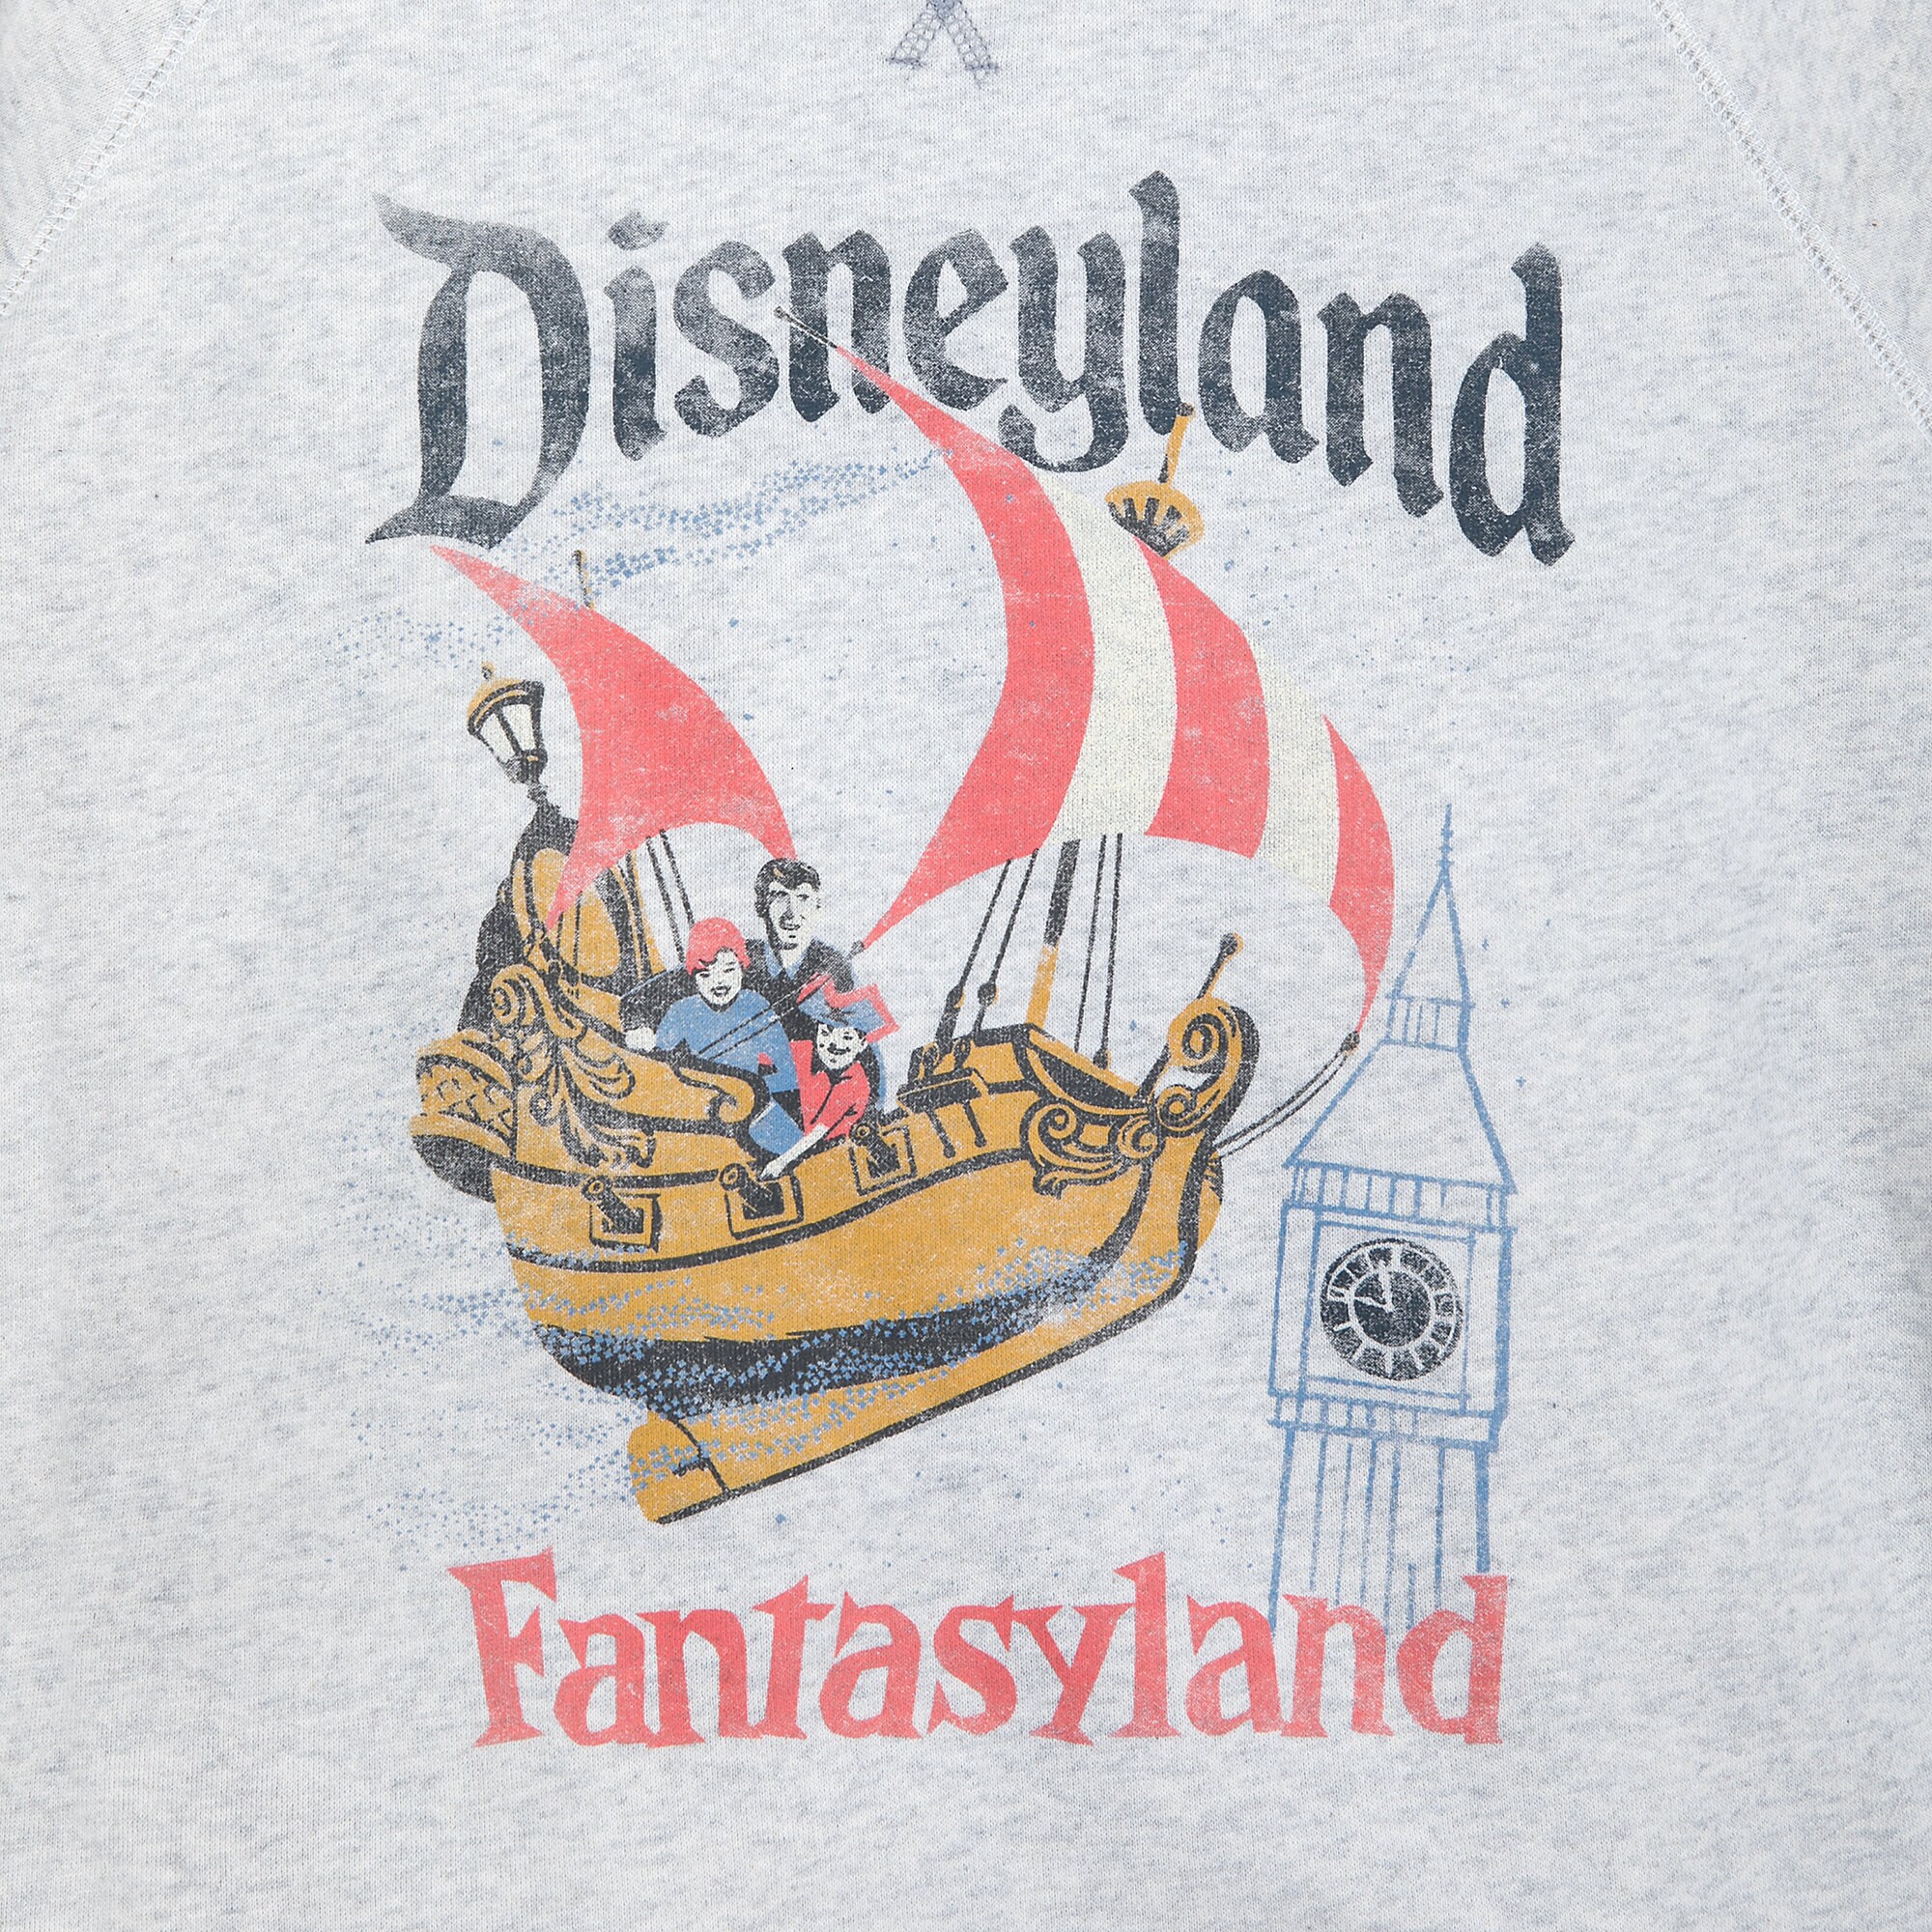 Fantasyland Sweatshirt for Men by Junk Food - Disneyland